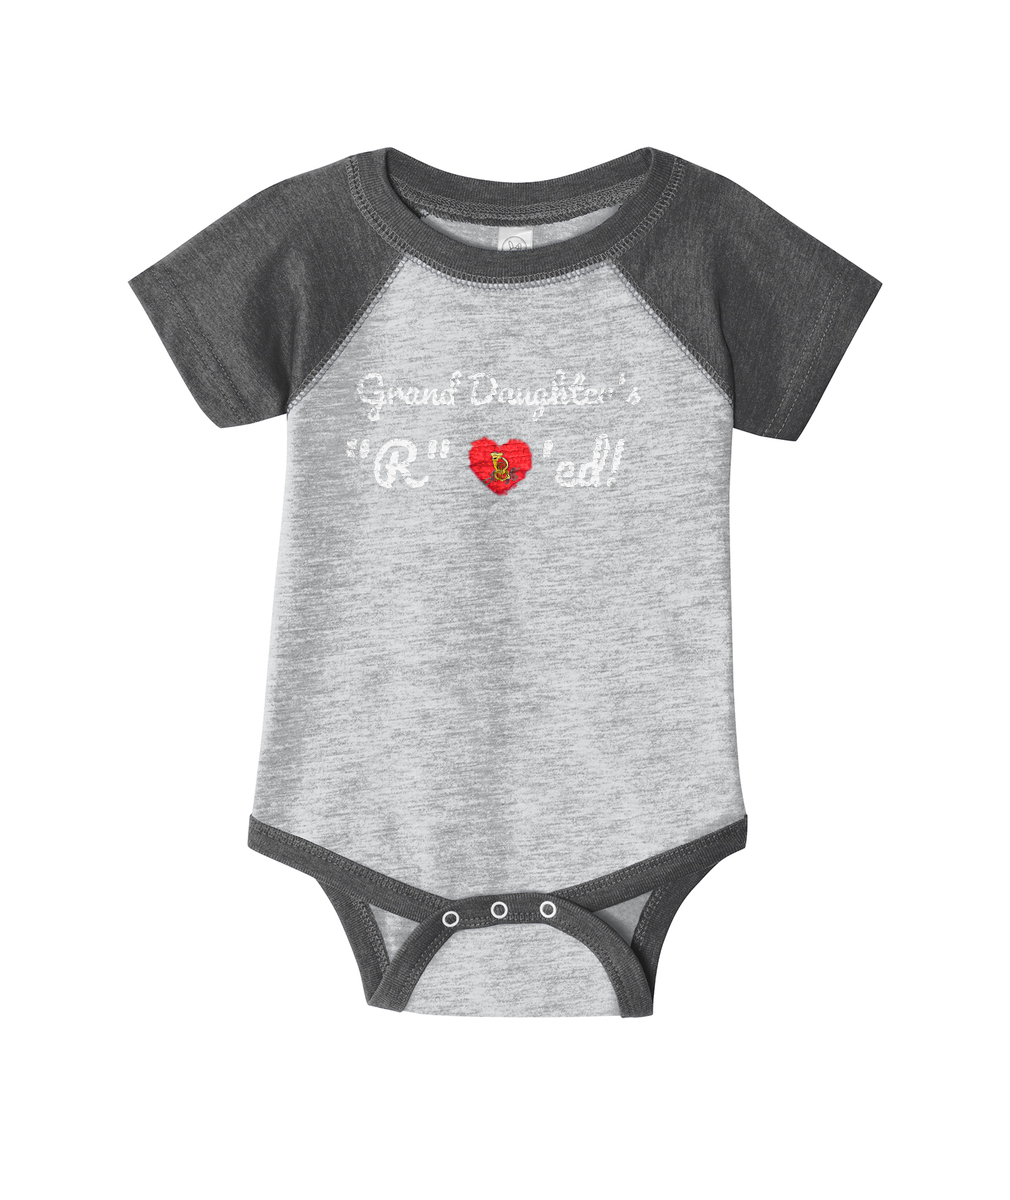 Grand Daughter Love™ Embroidered Infant Baseball Fine Jersey Bodysuit or Similar